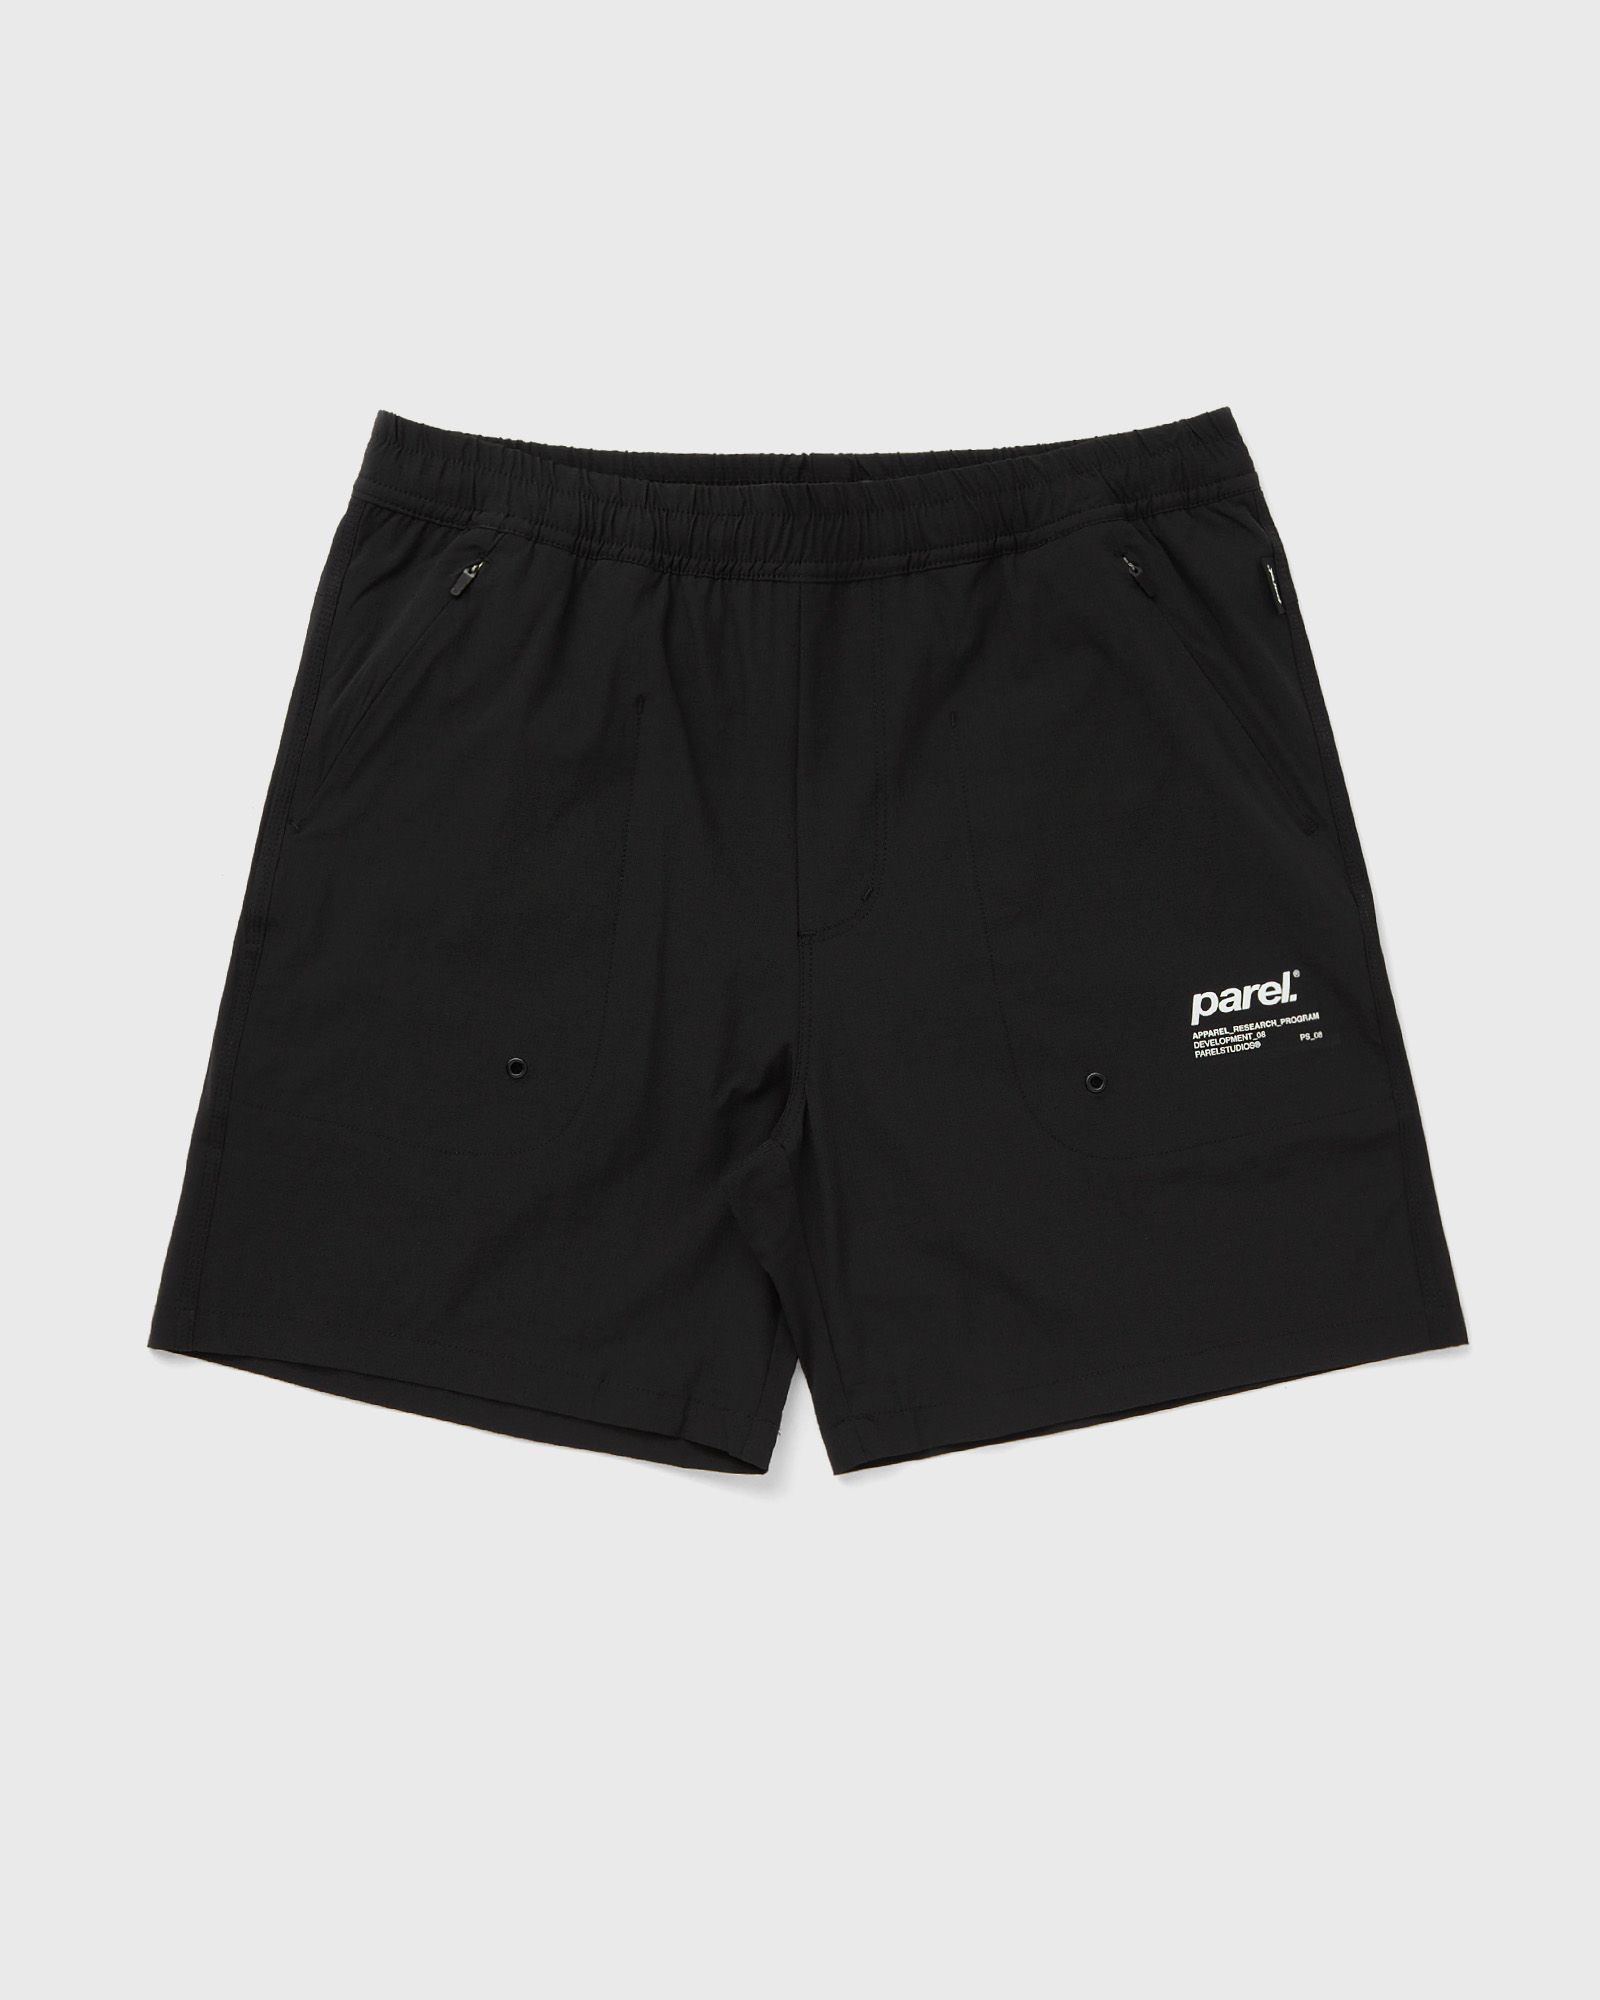 Parel studios - saana shorts men sport & team shorts black in größe:xl